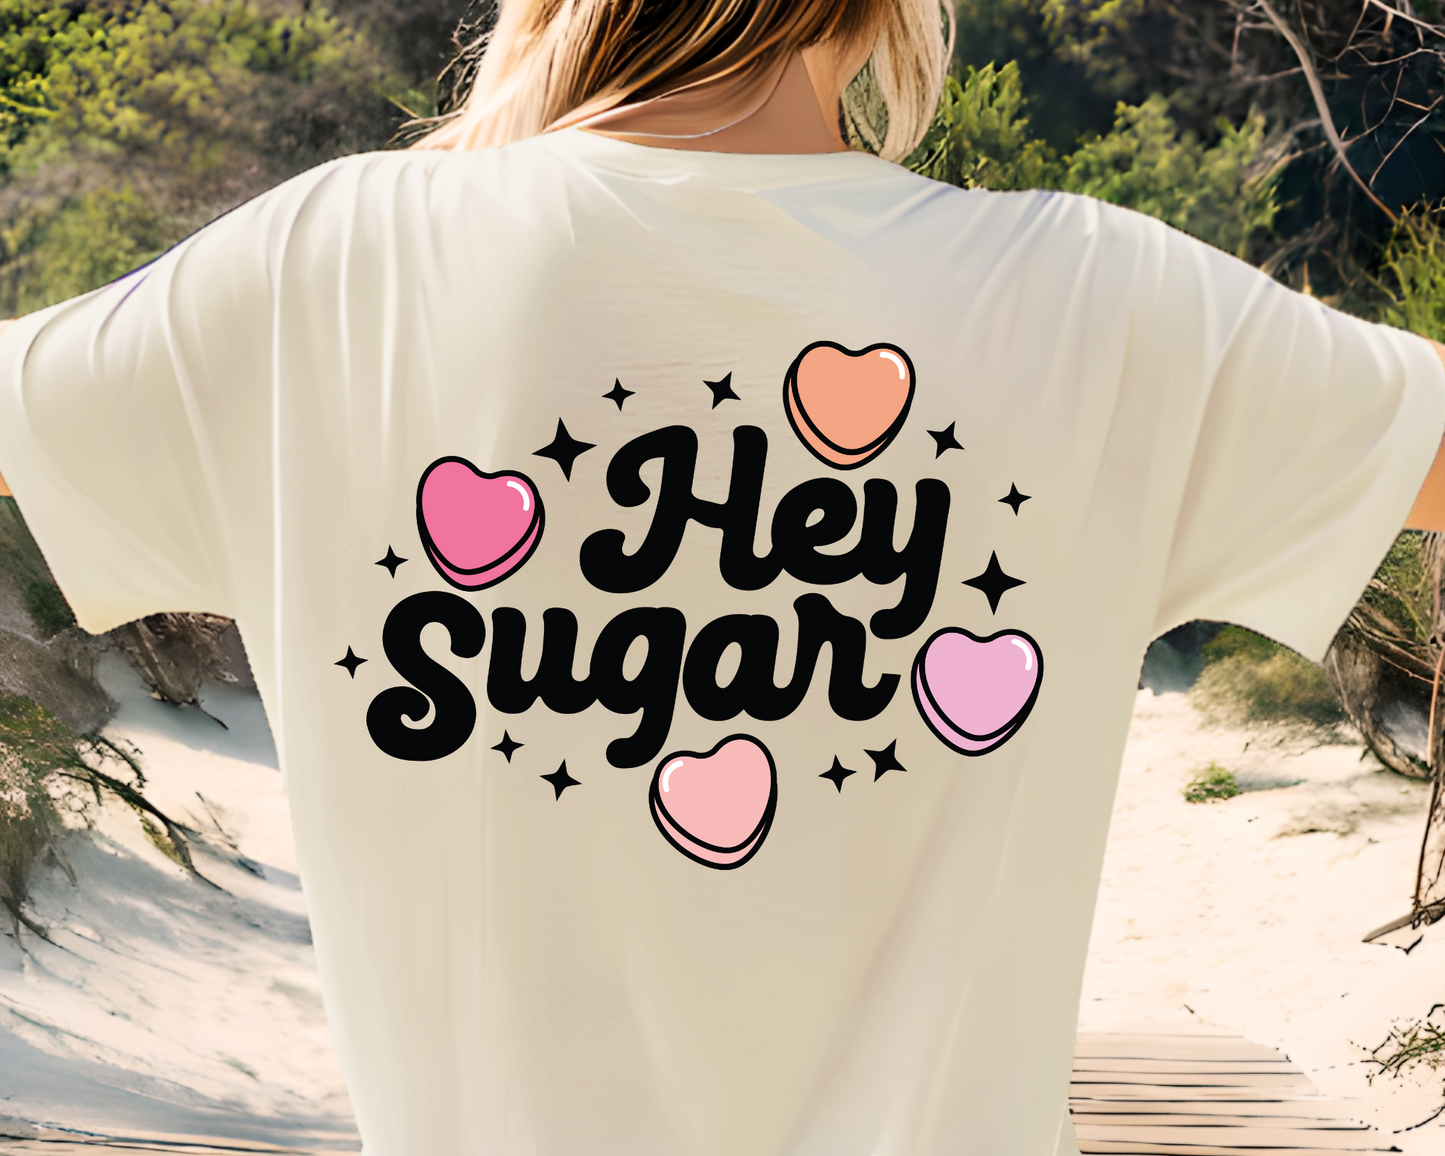 FREE Hey Sugar SVG | Valentine's Day SVG